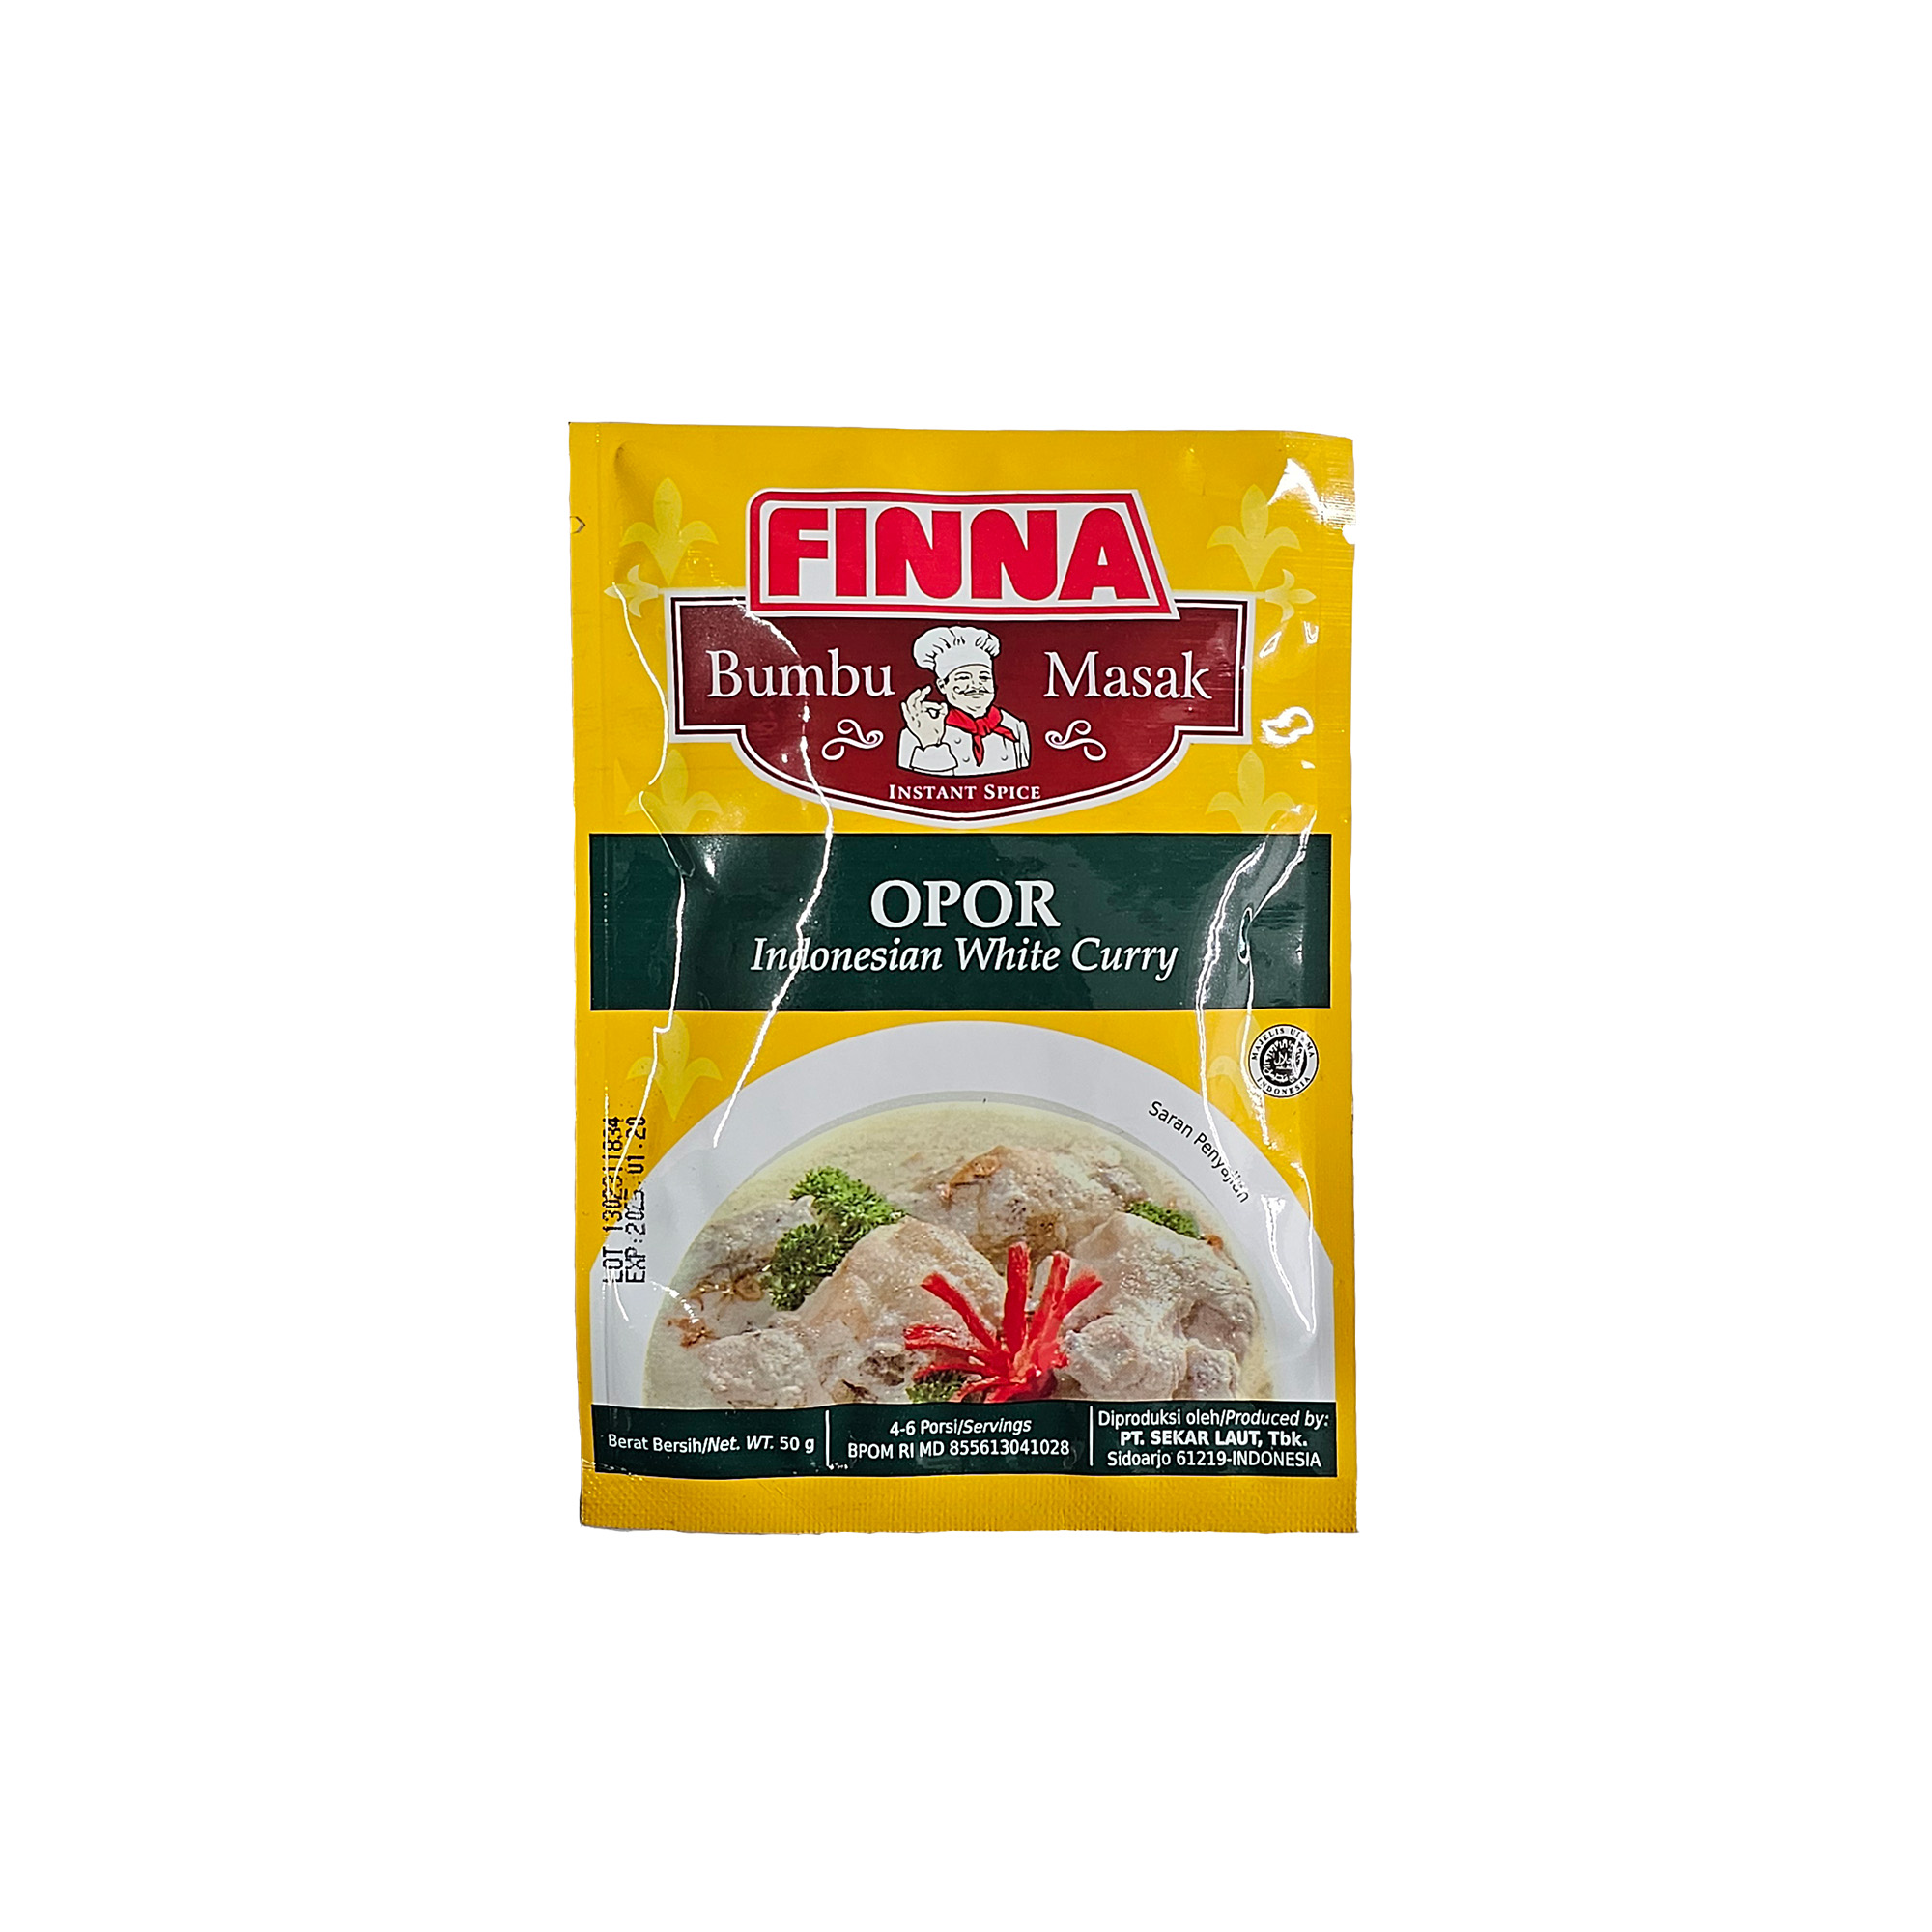 Opor / Indonesian White Curry (Finna)